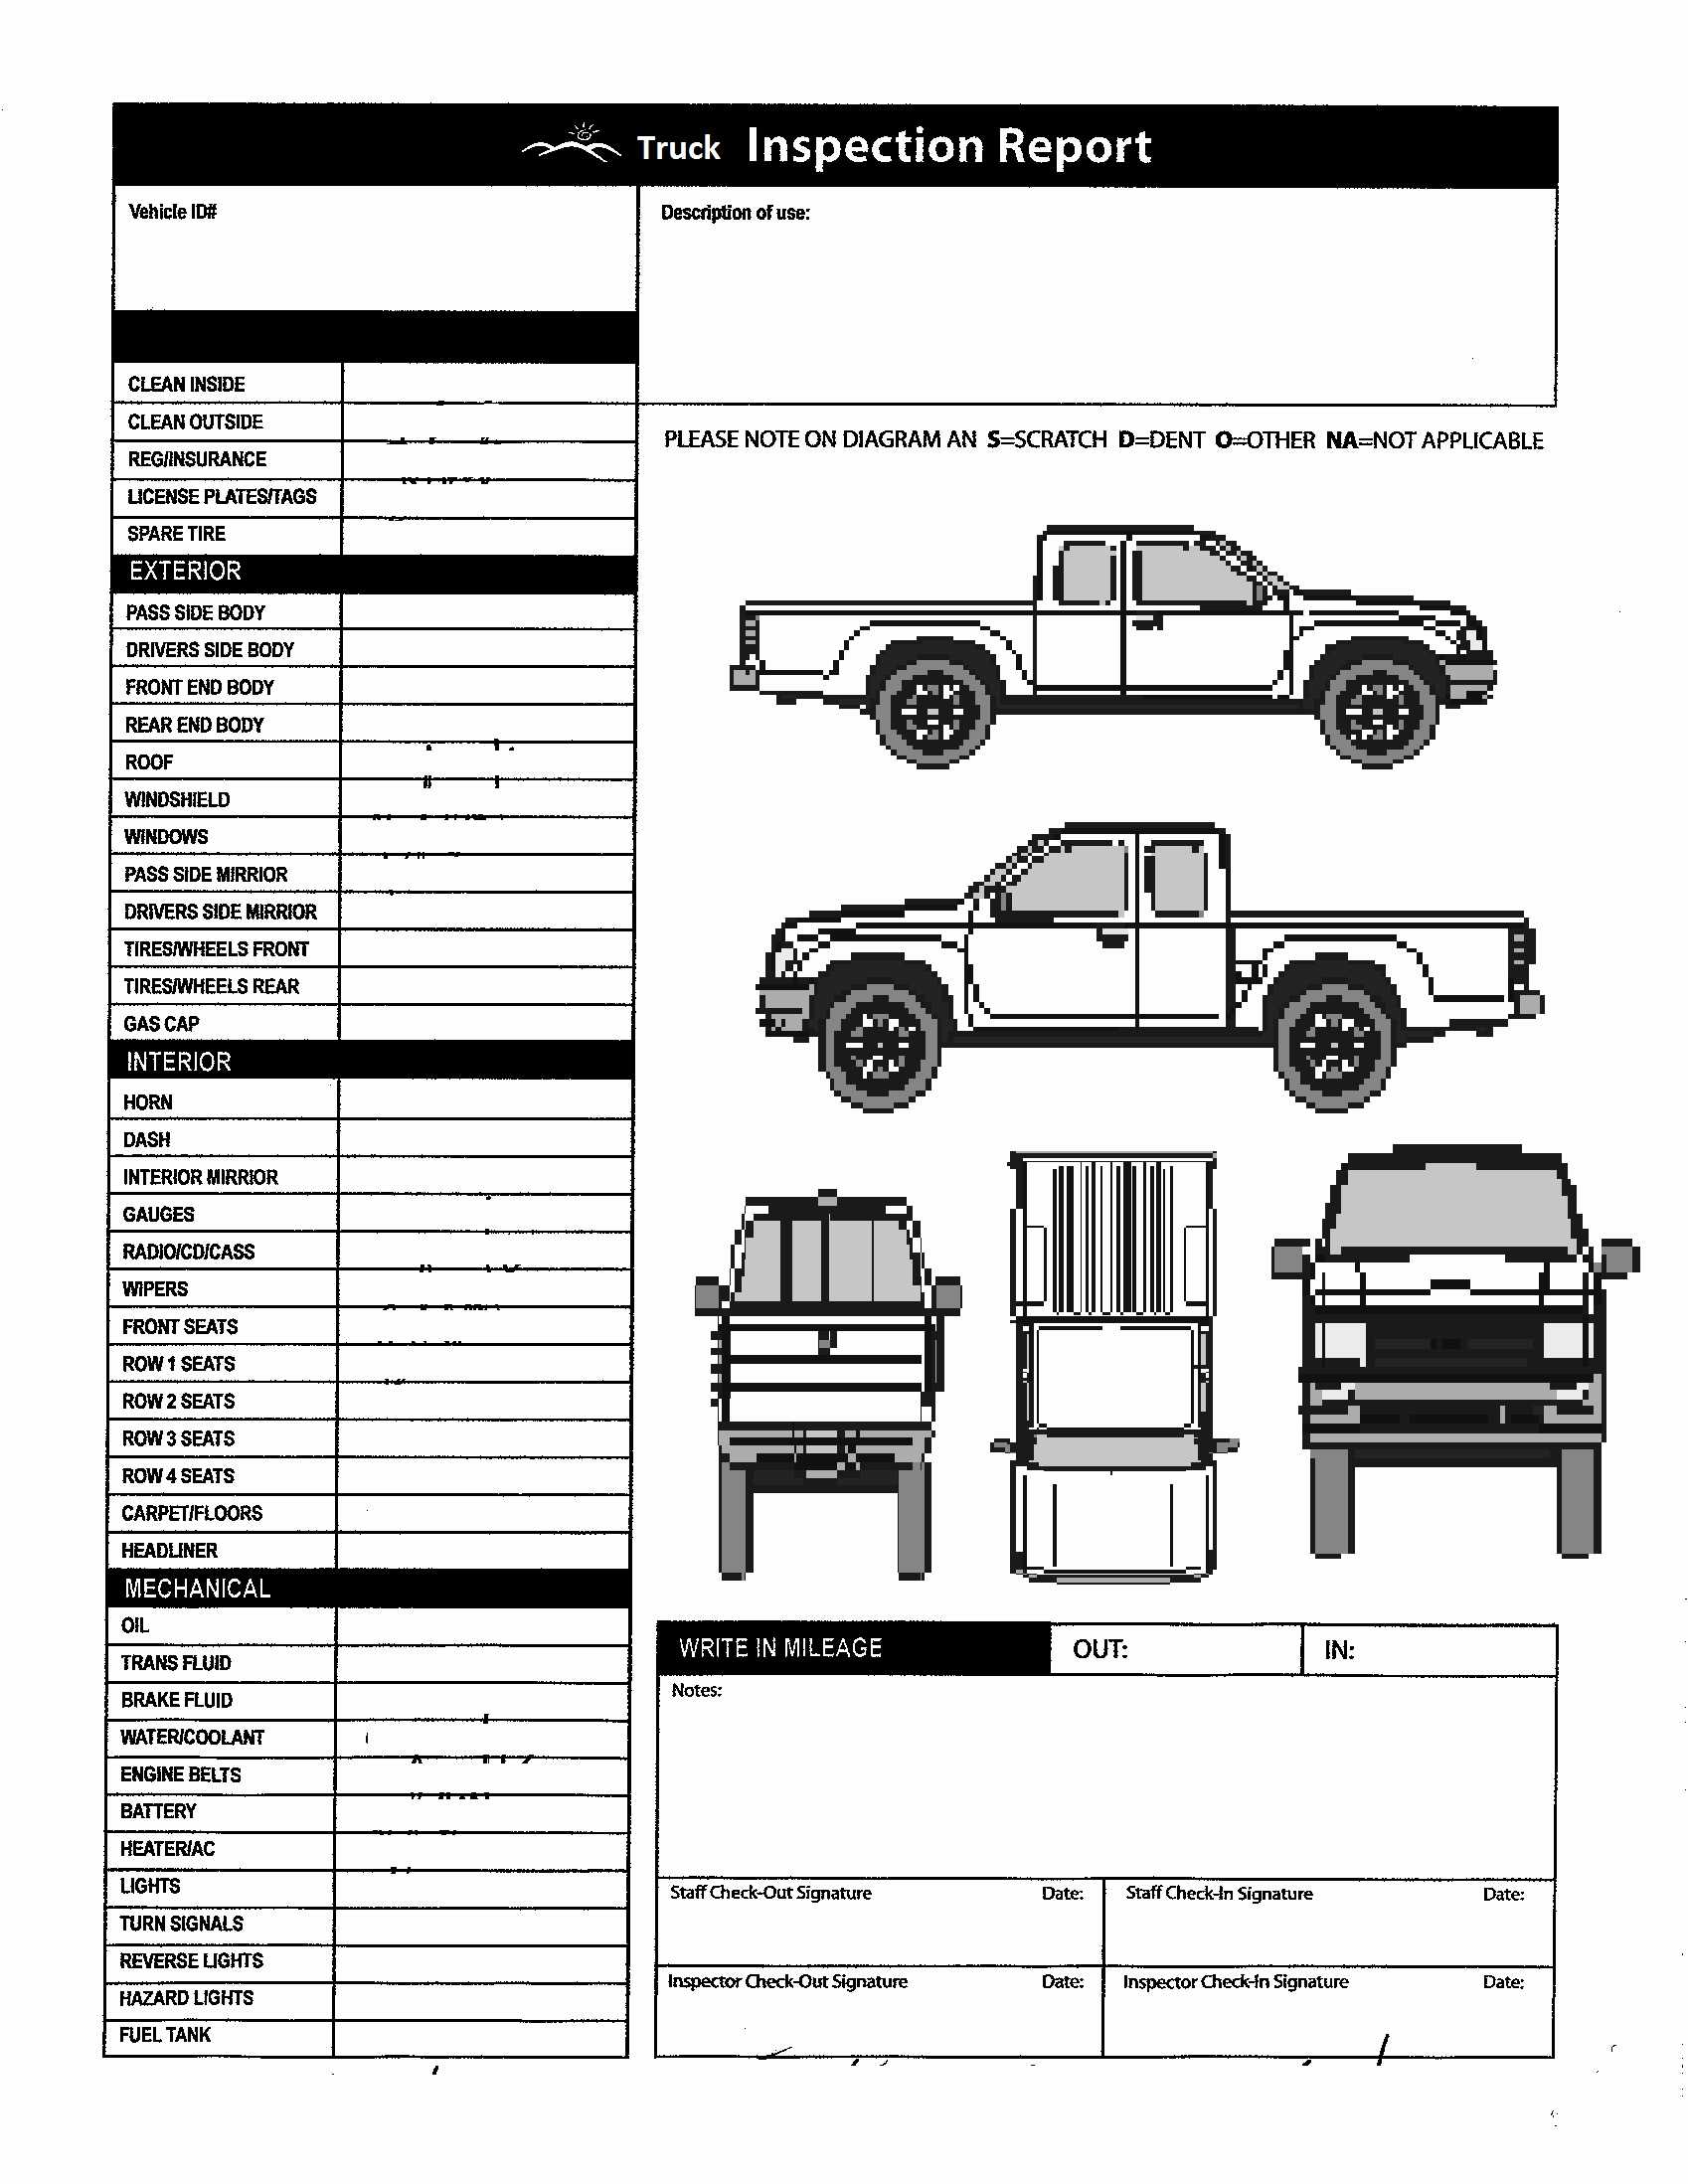 Inspection Spreadsheet Template Vehicle Checklist Excel Within Vehicle Checklist Template Word